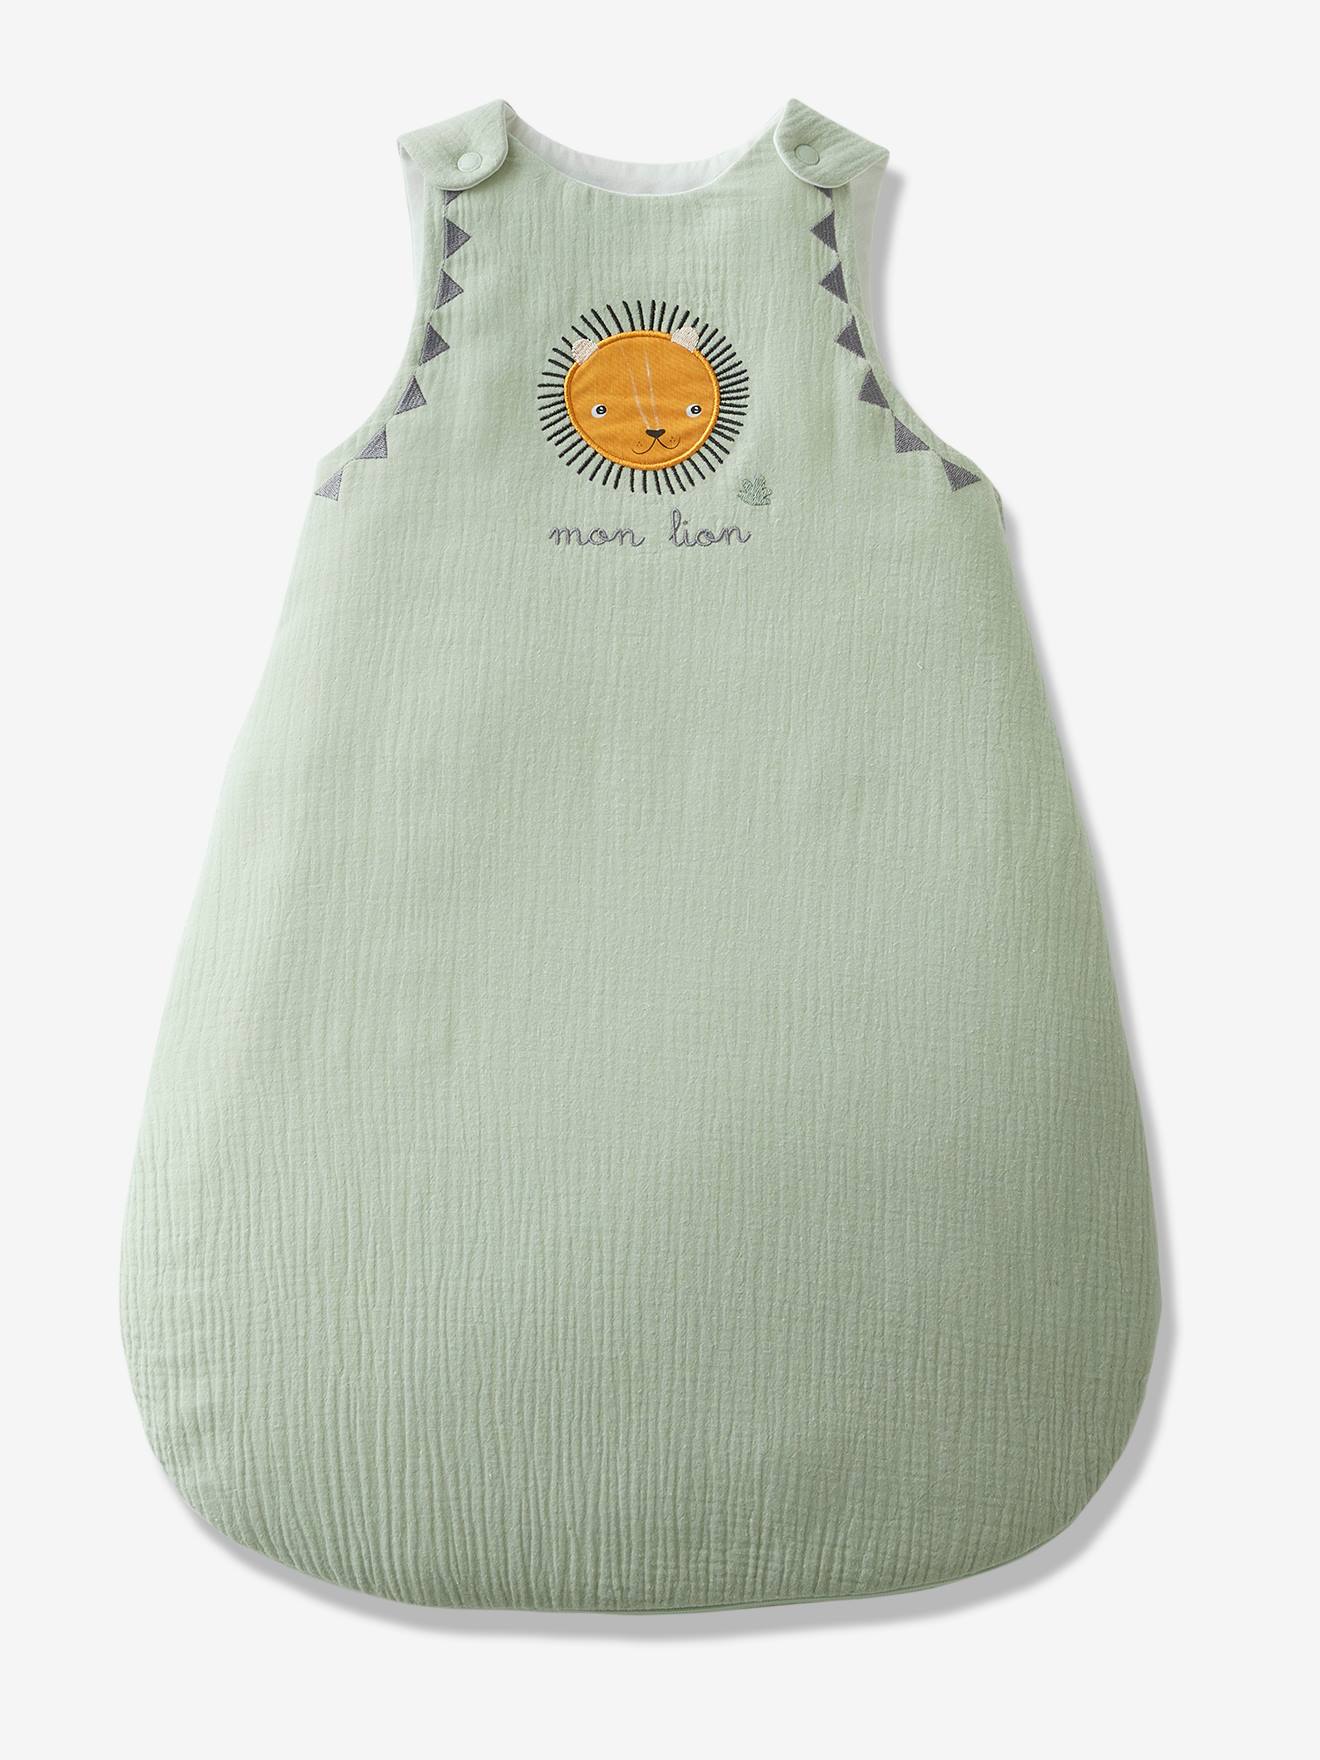 Sleeveless Baby Sleep Bag in Cotton Gauze, "Mon Lion" green